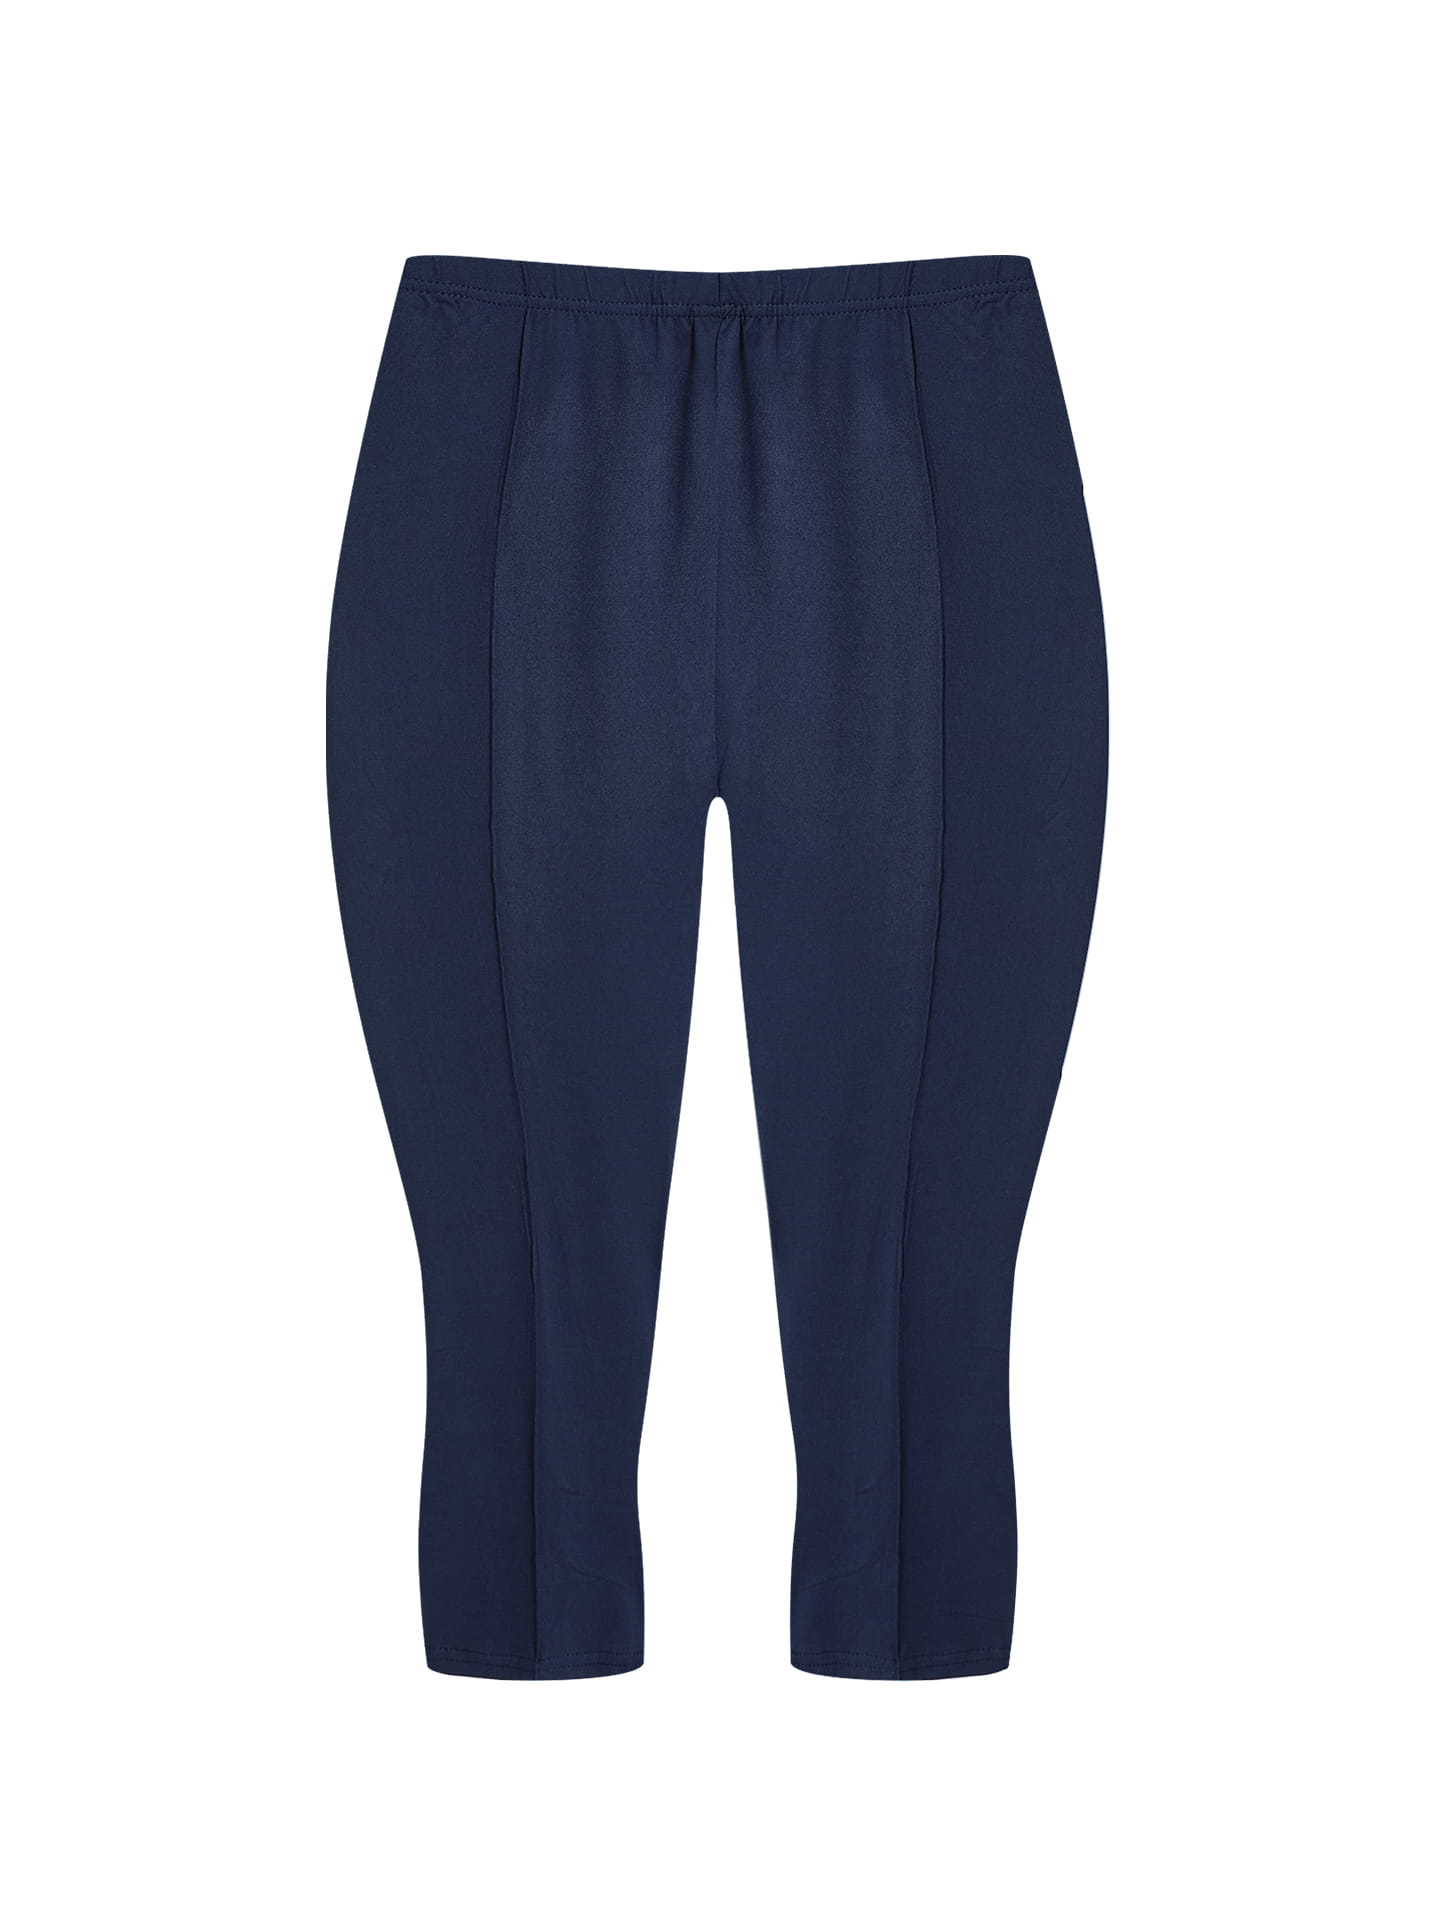 Plus size capri leggings with decorative seams in dark blue, 5.99€